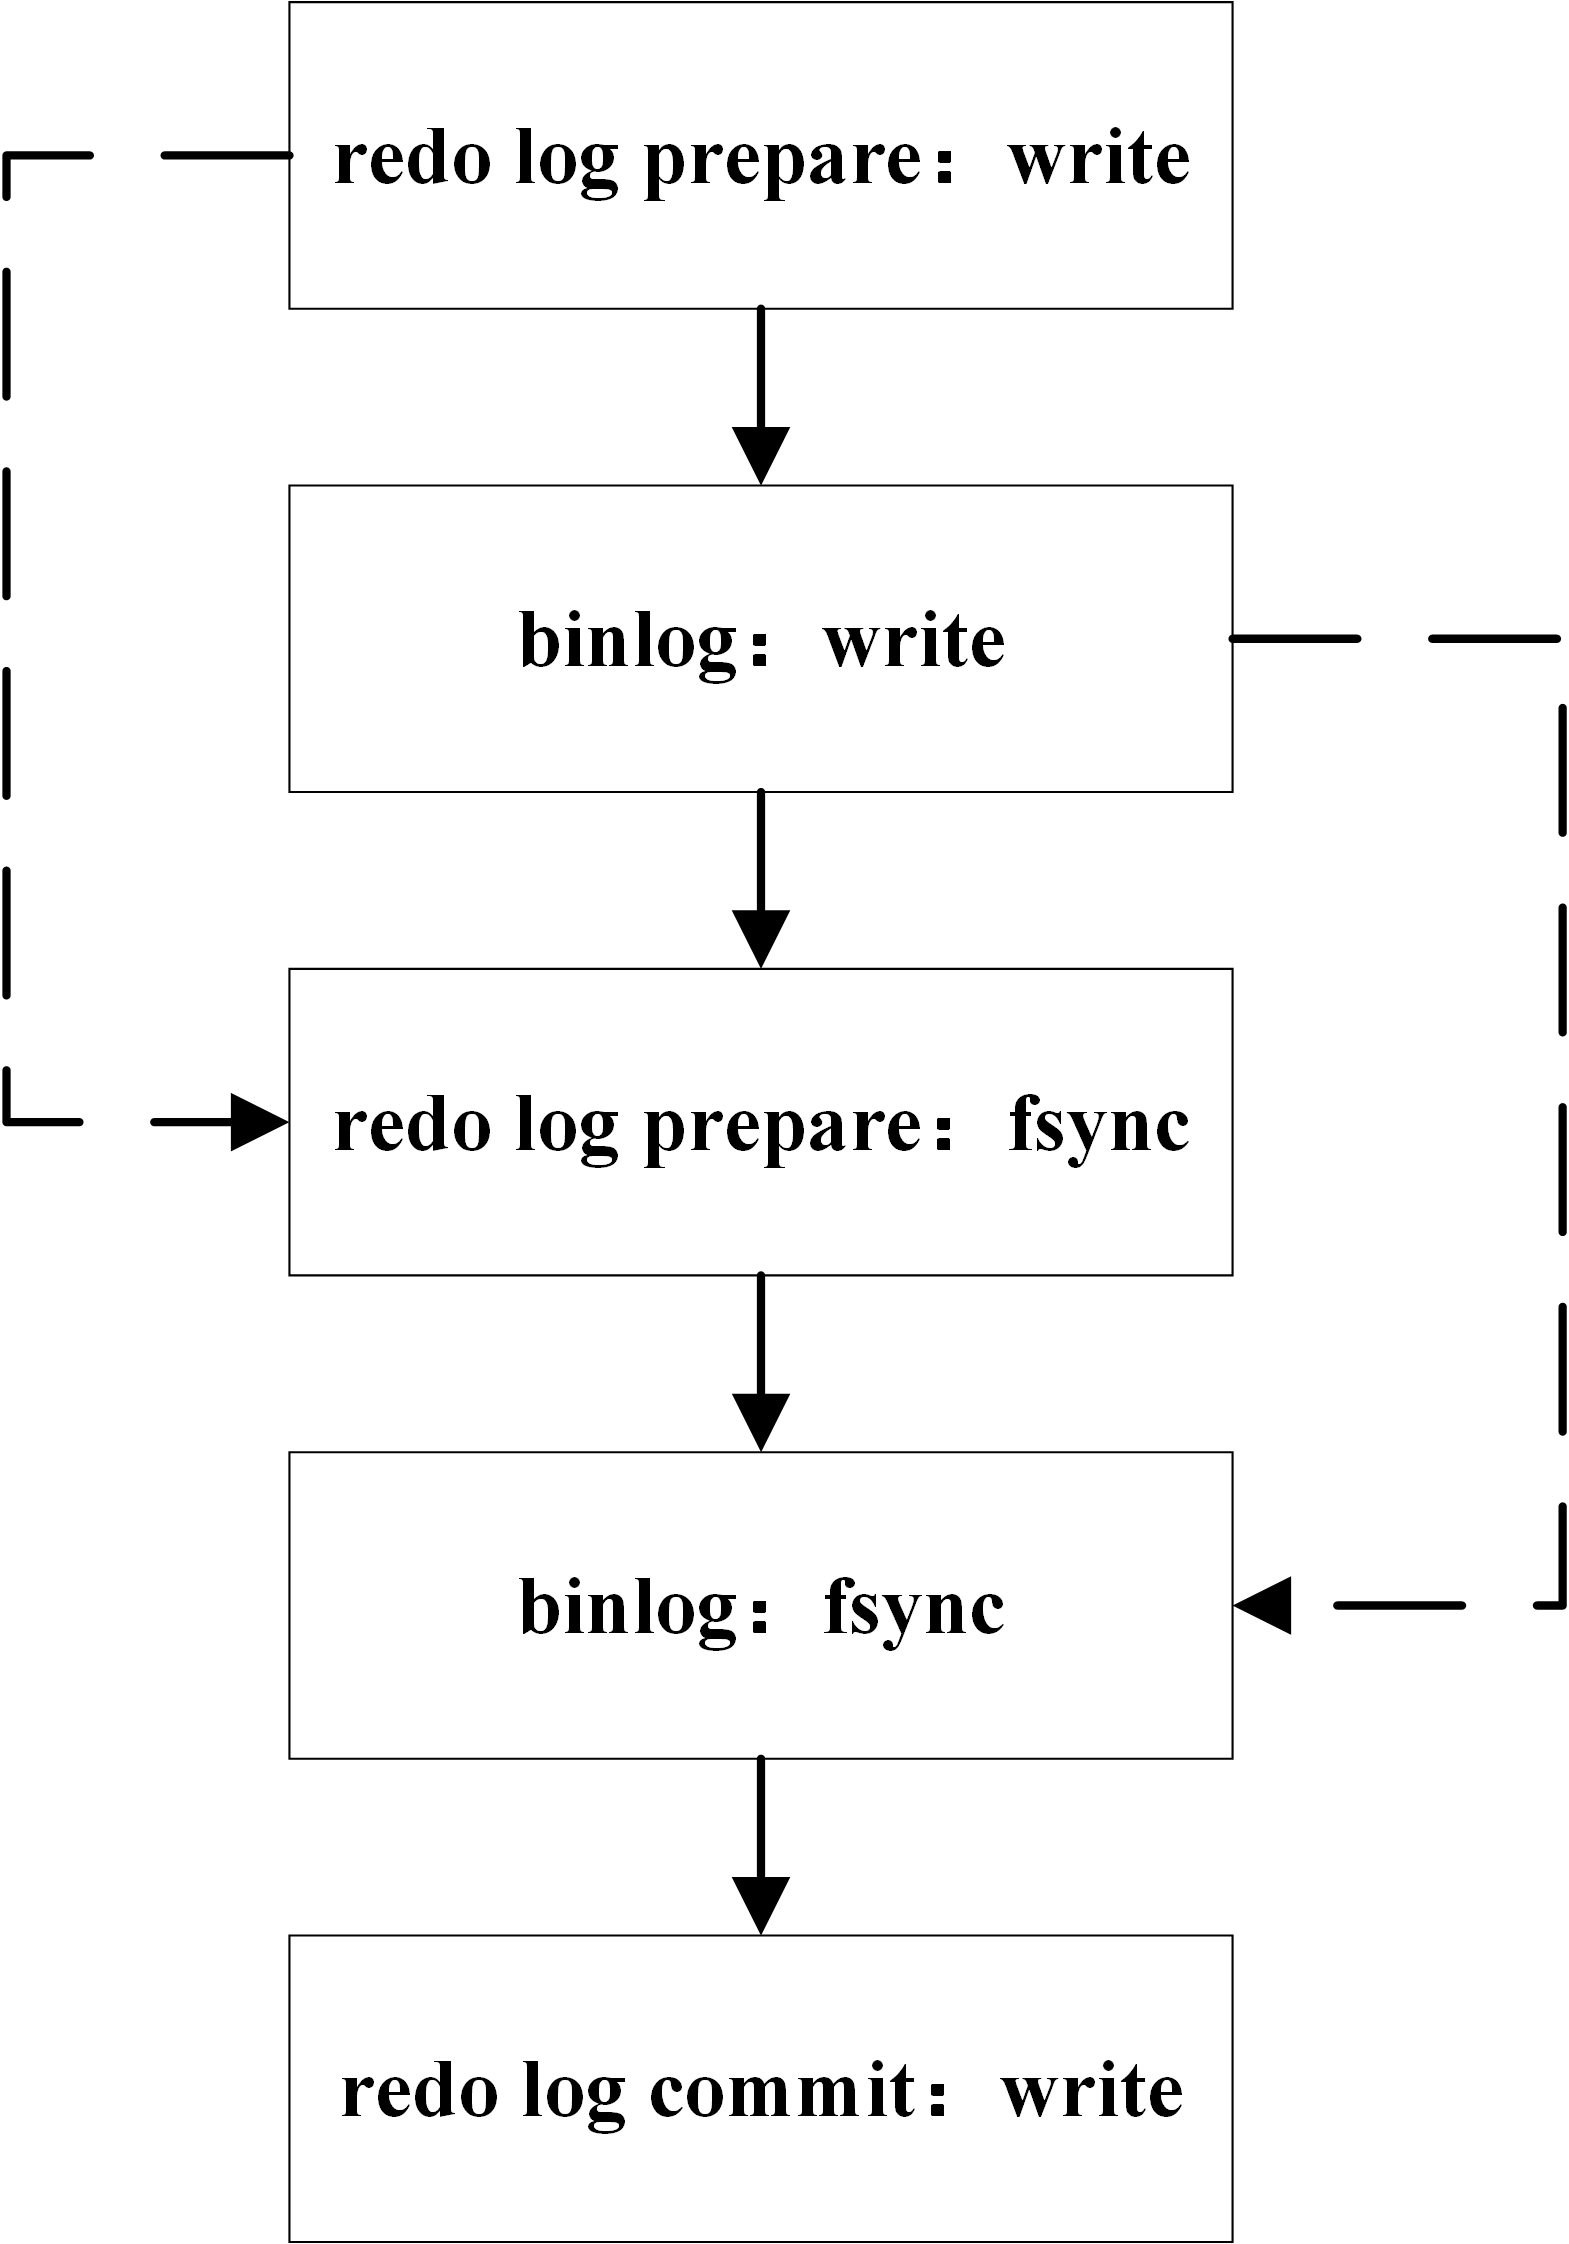 MySQL 日志系统中的redolog和binlog的用法